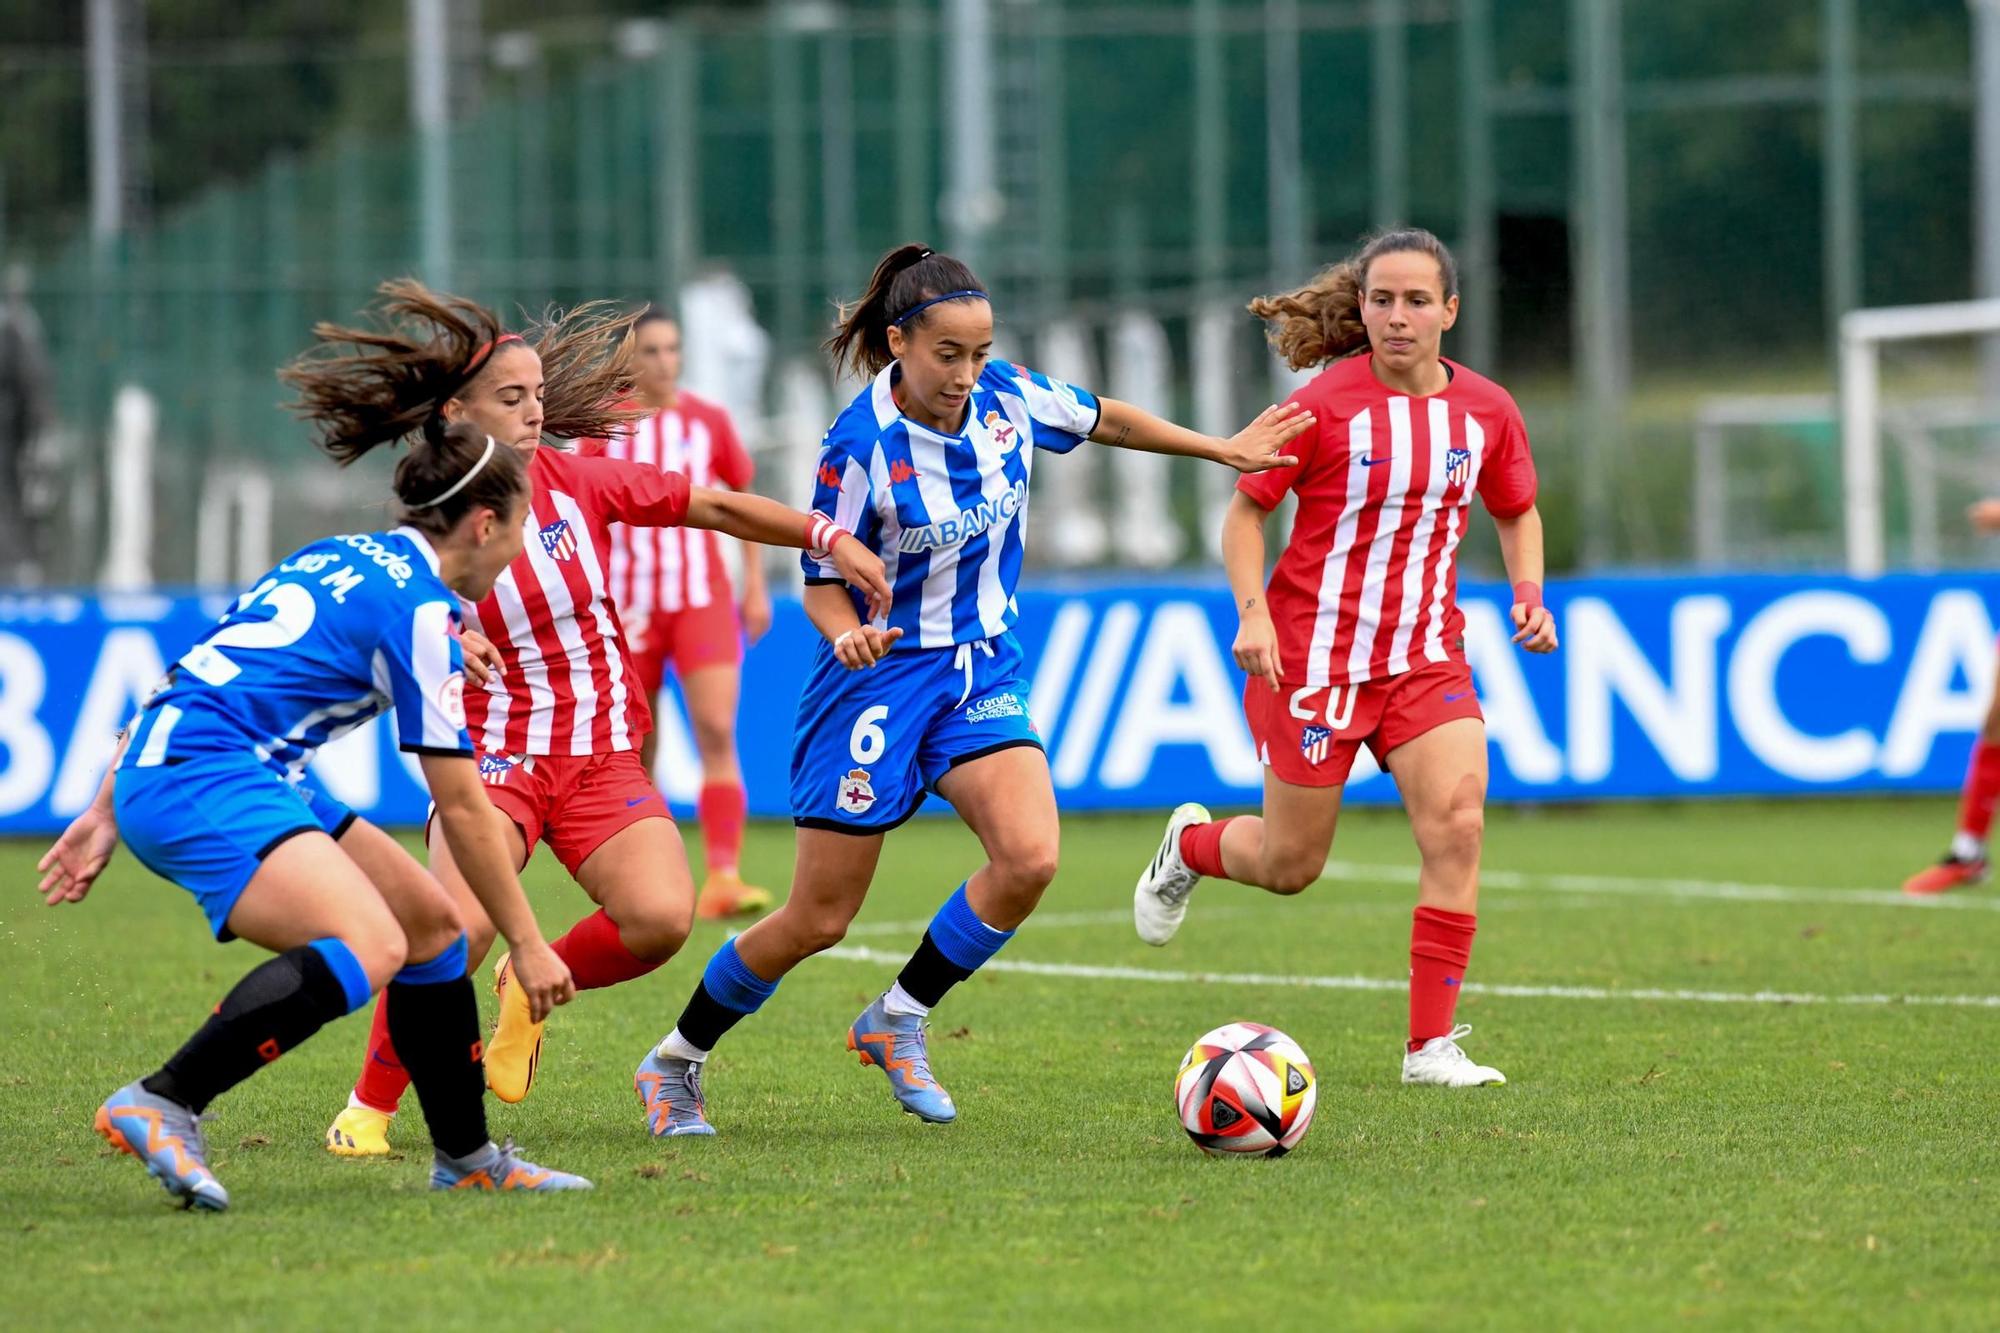 Inés Altamira rescata al Dépor Abanca frente al Atlético de Madrid B (2-1)